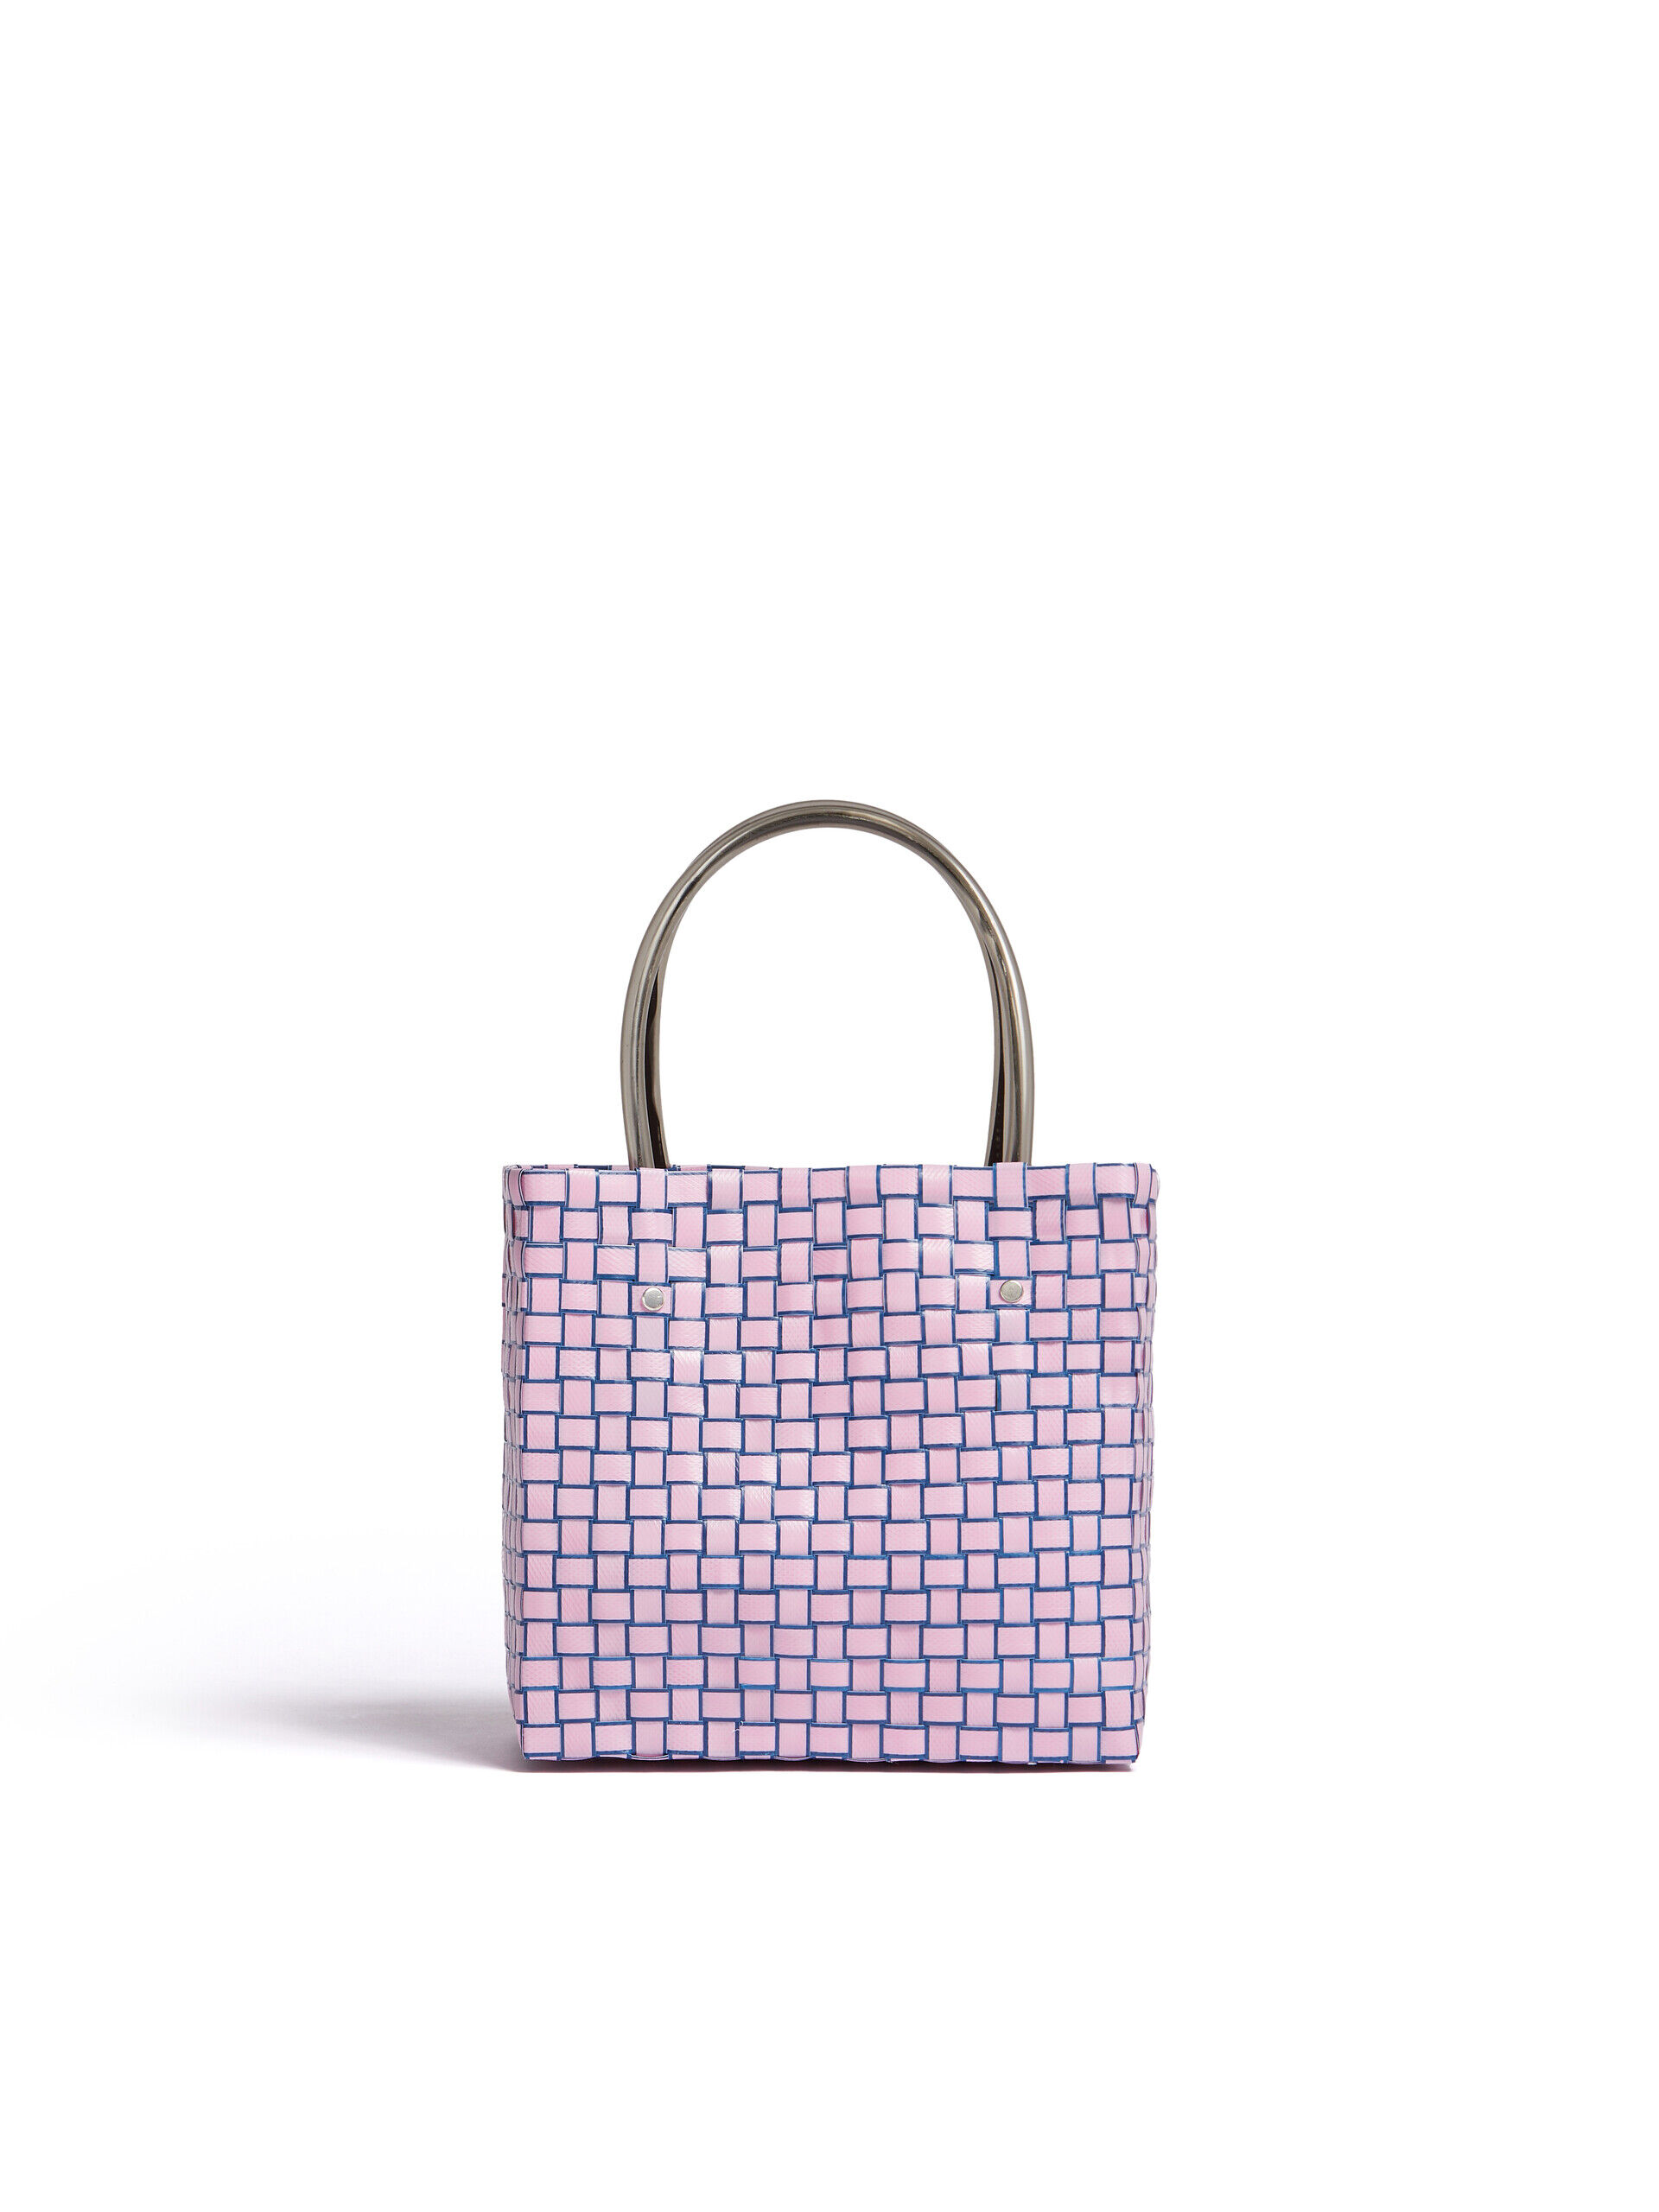 Pink MARNI MARKET MINI FLOWER BASKET bag | Marni